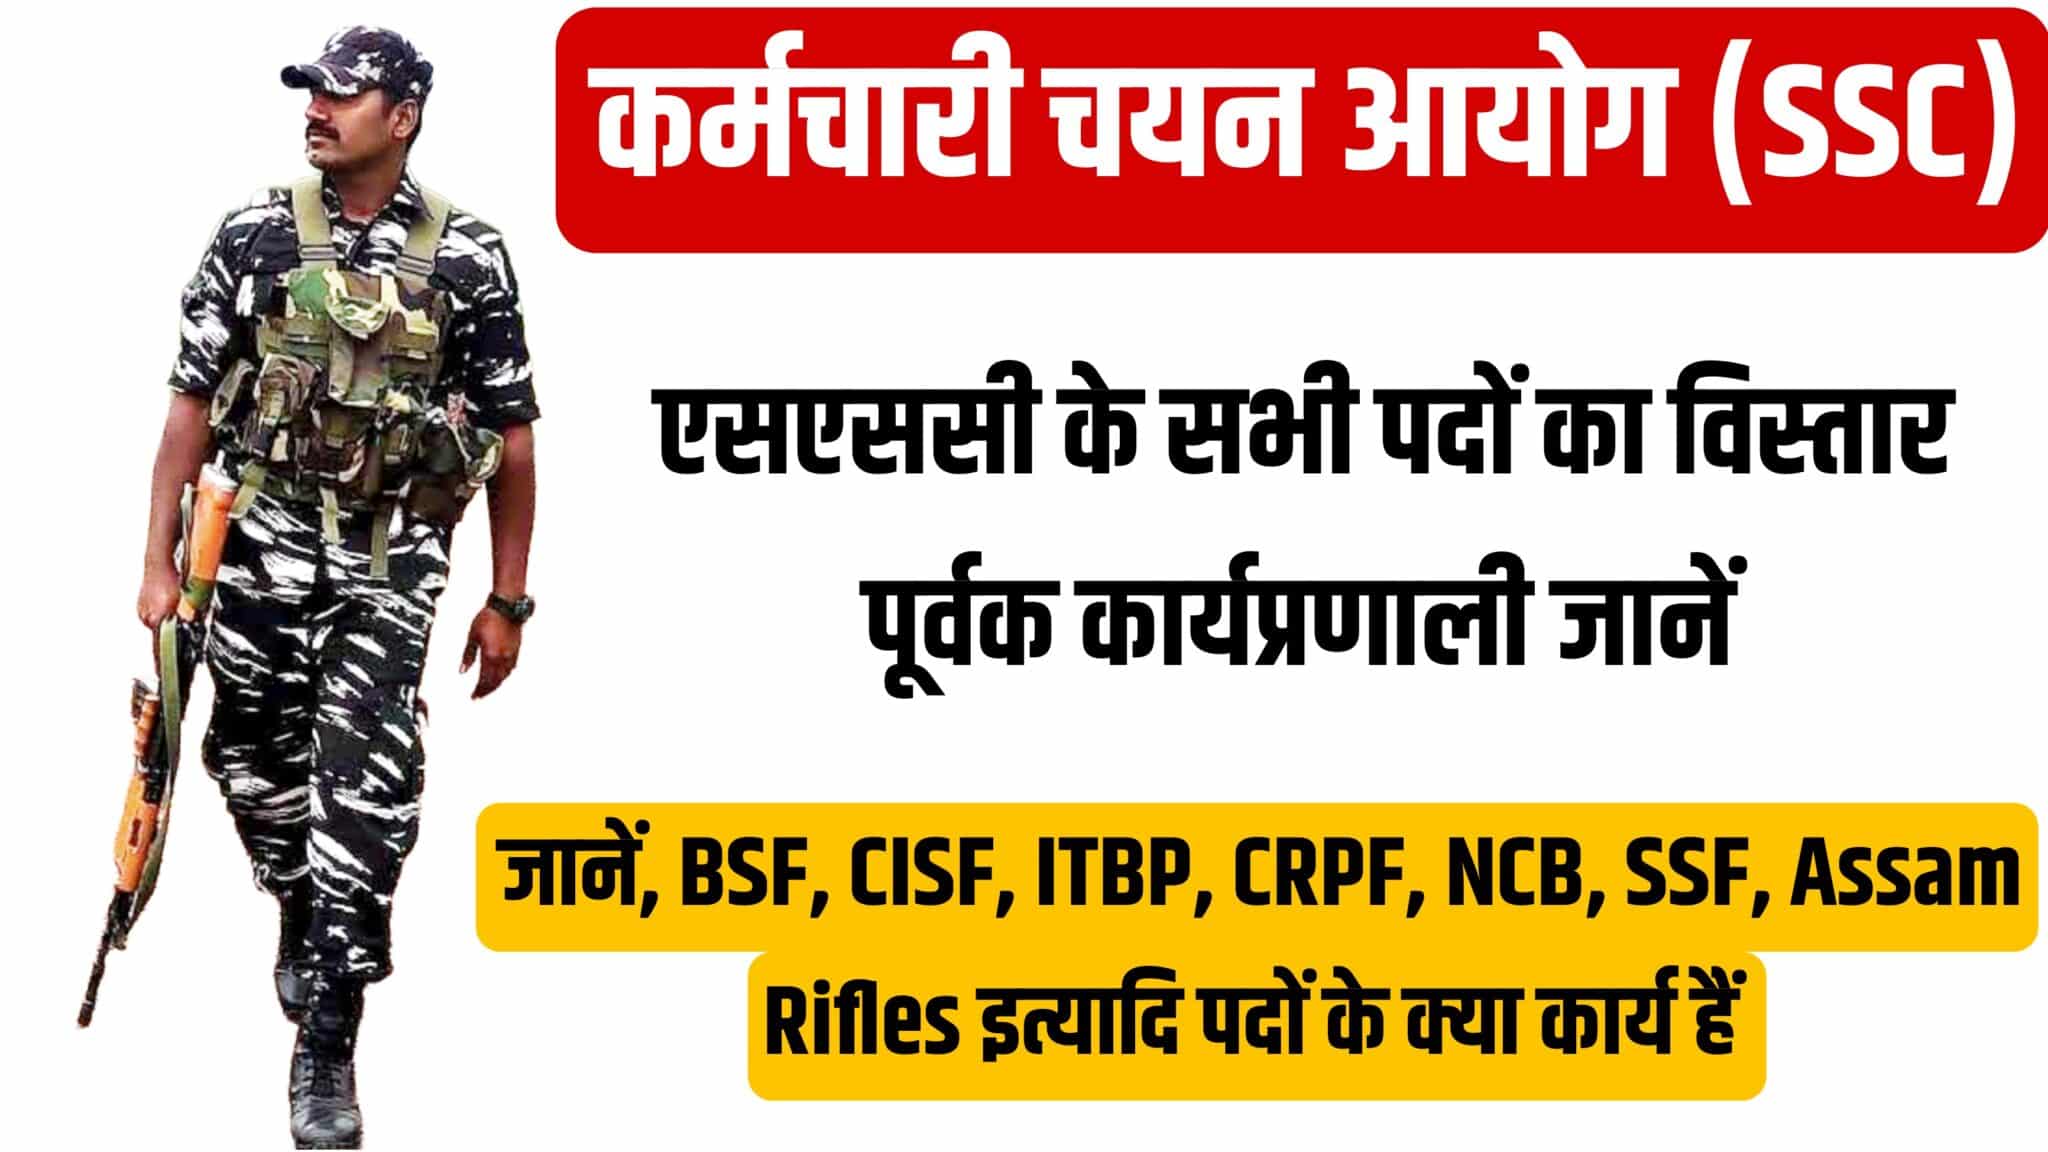 SSC GD Constable BSF, CISF, ITBP, CRPF, NCB, SSF, Assam Rifles.